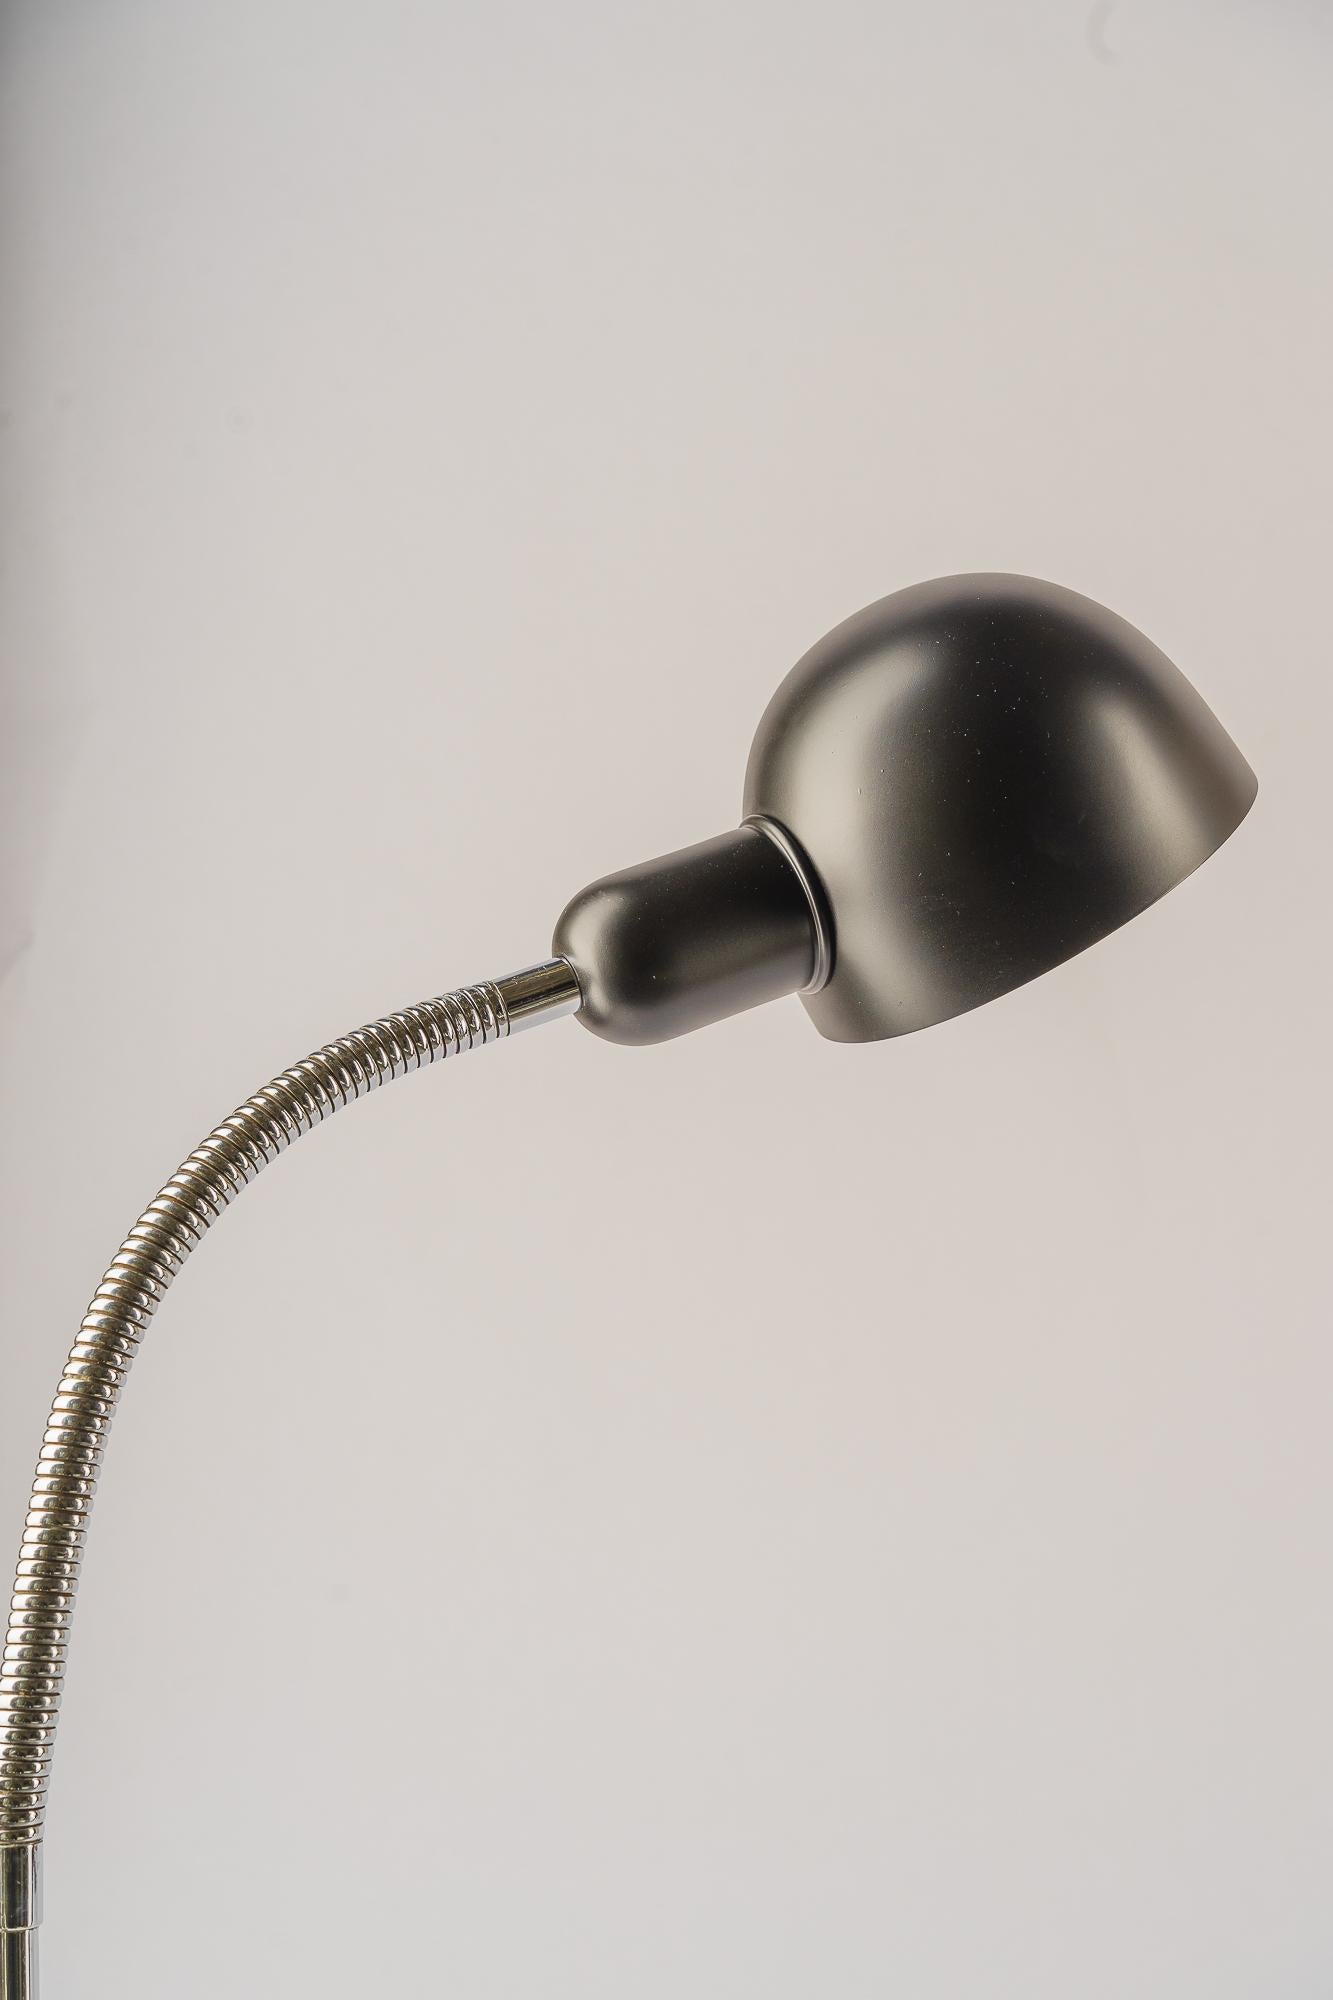 Flexible Desk Clamp Lamp 1950s
Metal ( chrome ) is Original condition
Aluminium is black lacquered